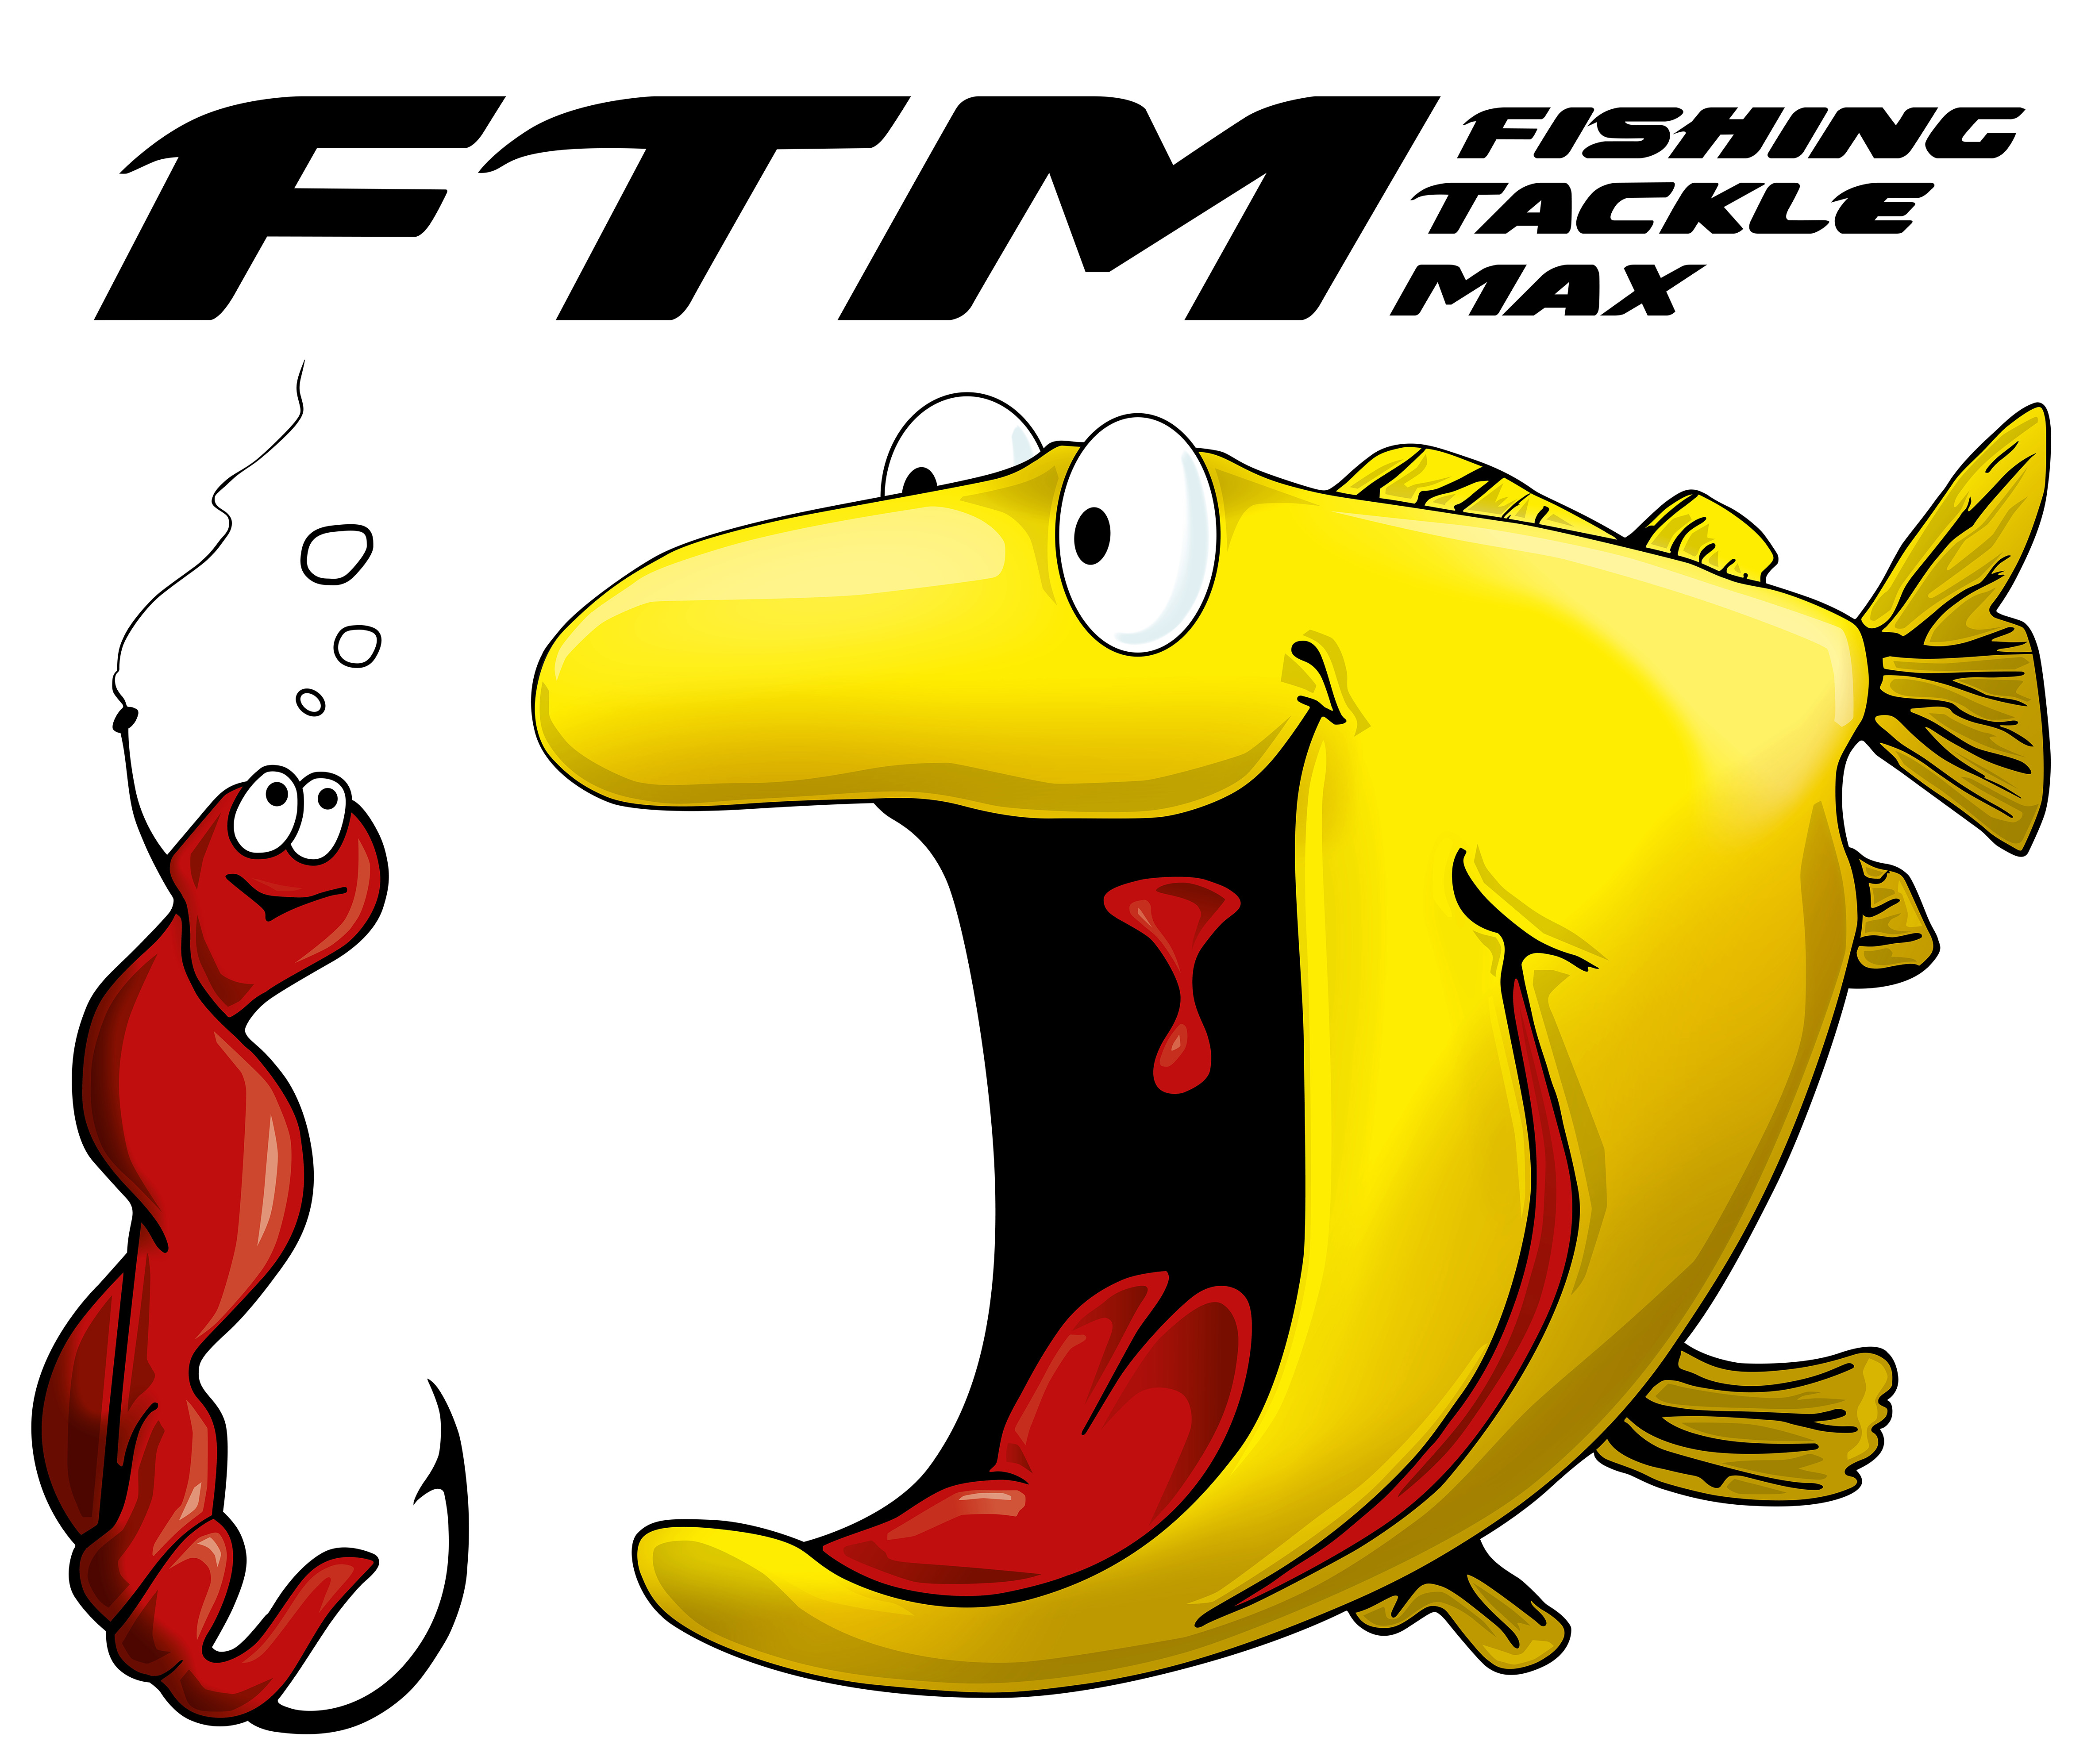 FTM Masu colgantes 10 nuevos colores 1,2g 29mm 0,5m profundidad fishing tackle Max